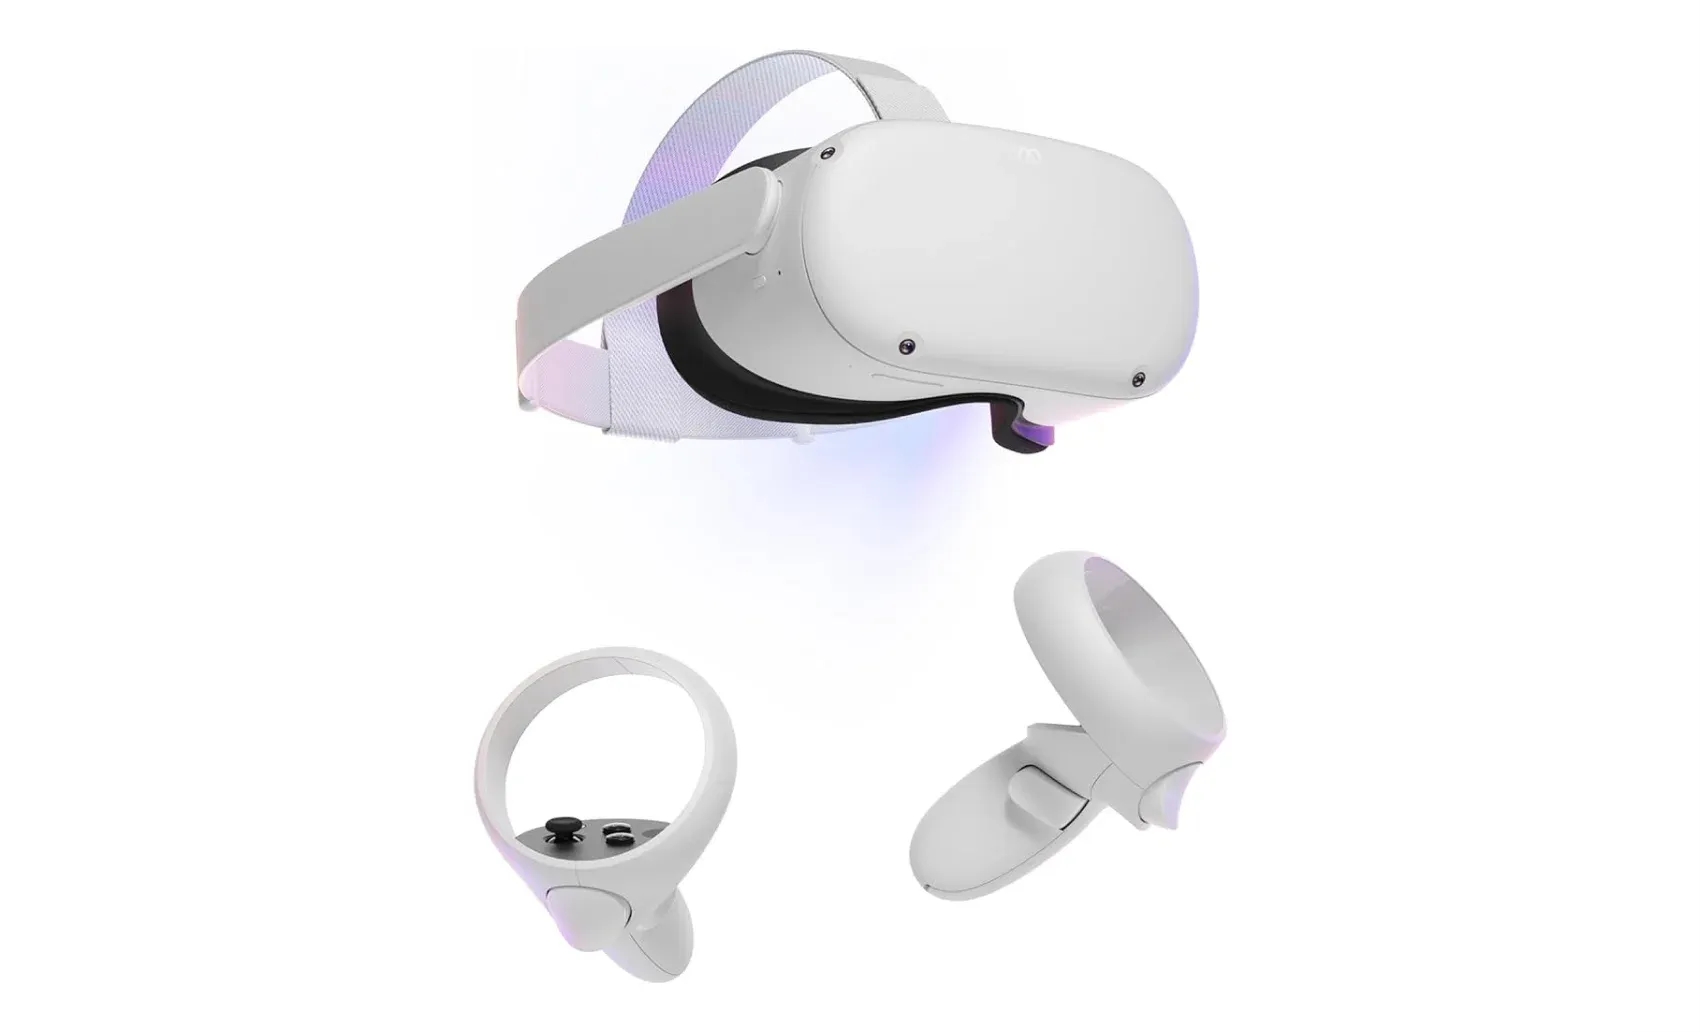 Choosing VR headsets